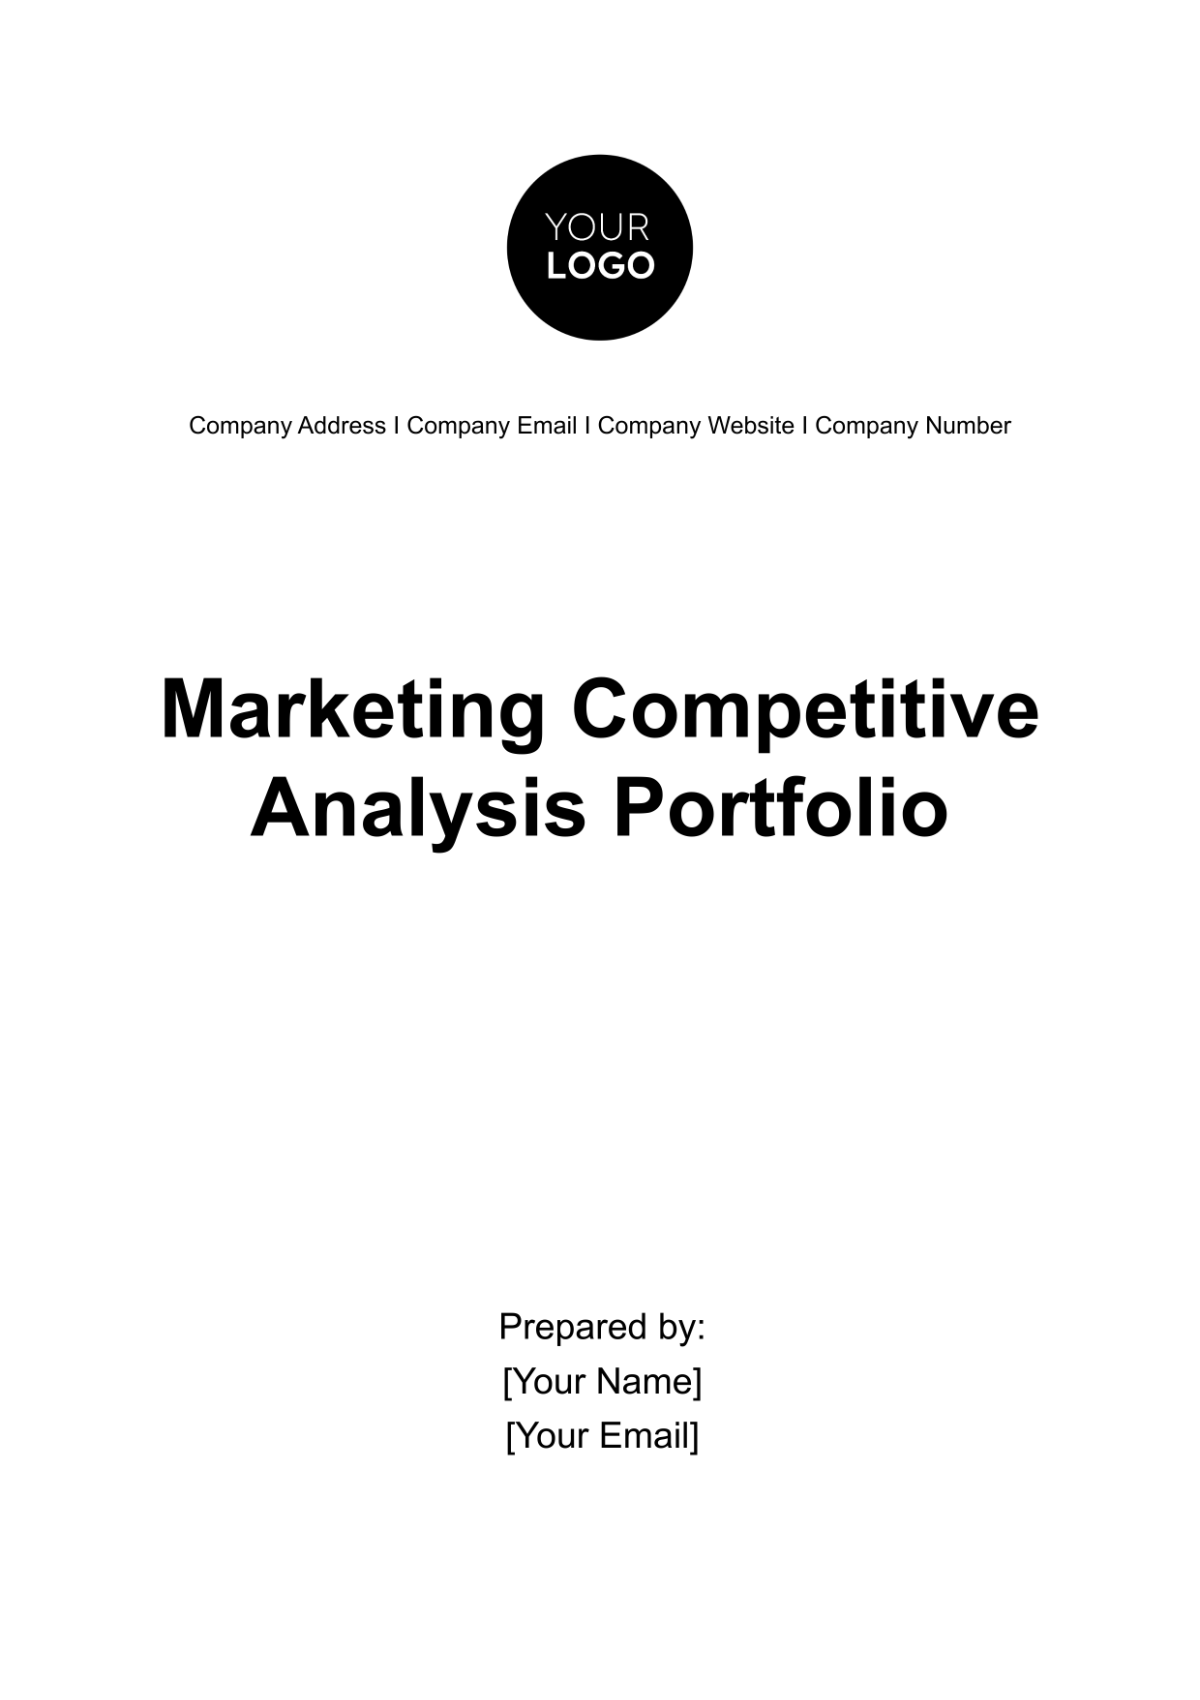 Free Marketing Competitive Analysis Portfolio Template